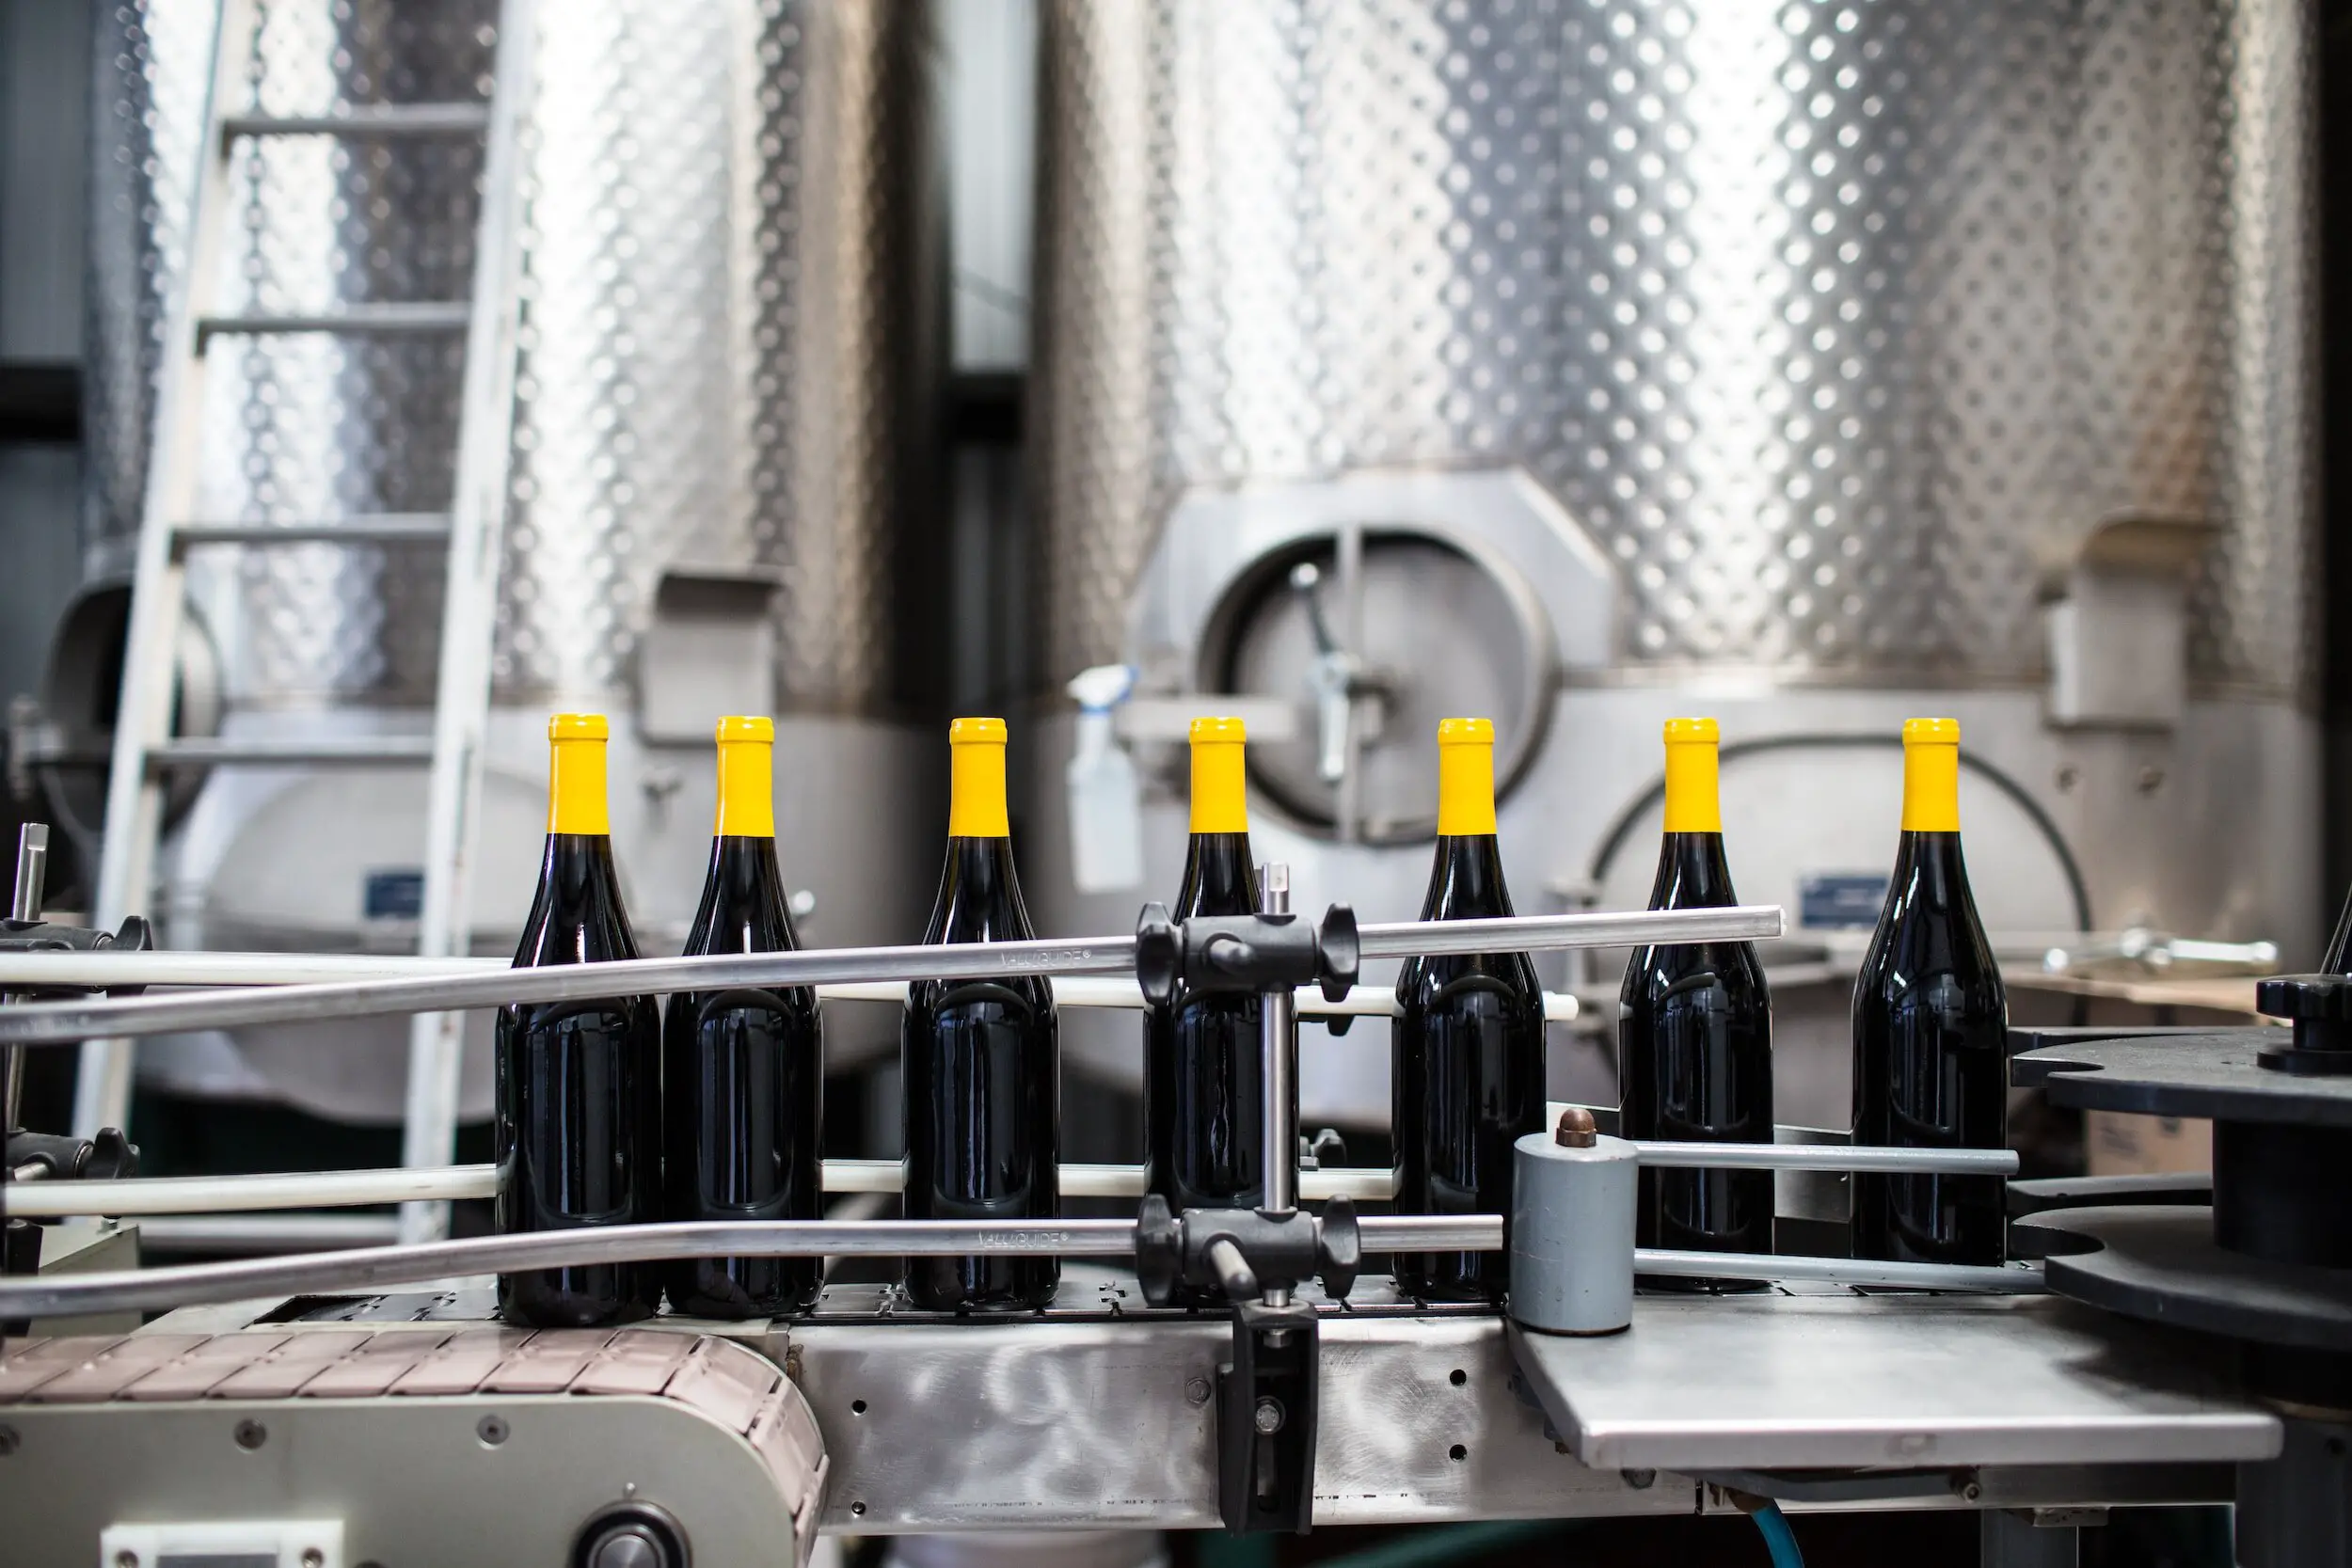 tempranillo vs garnacha - wine bottles in winery